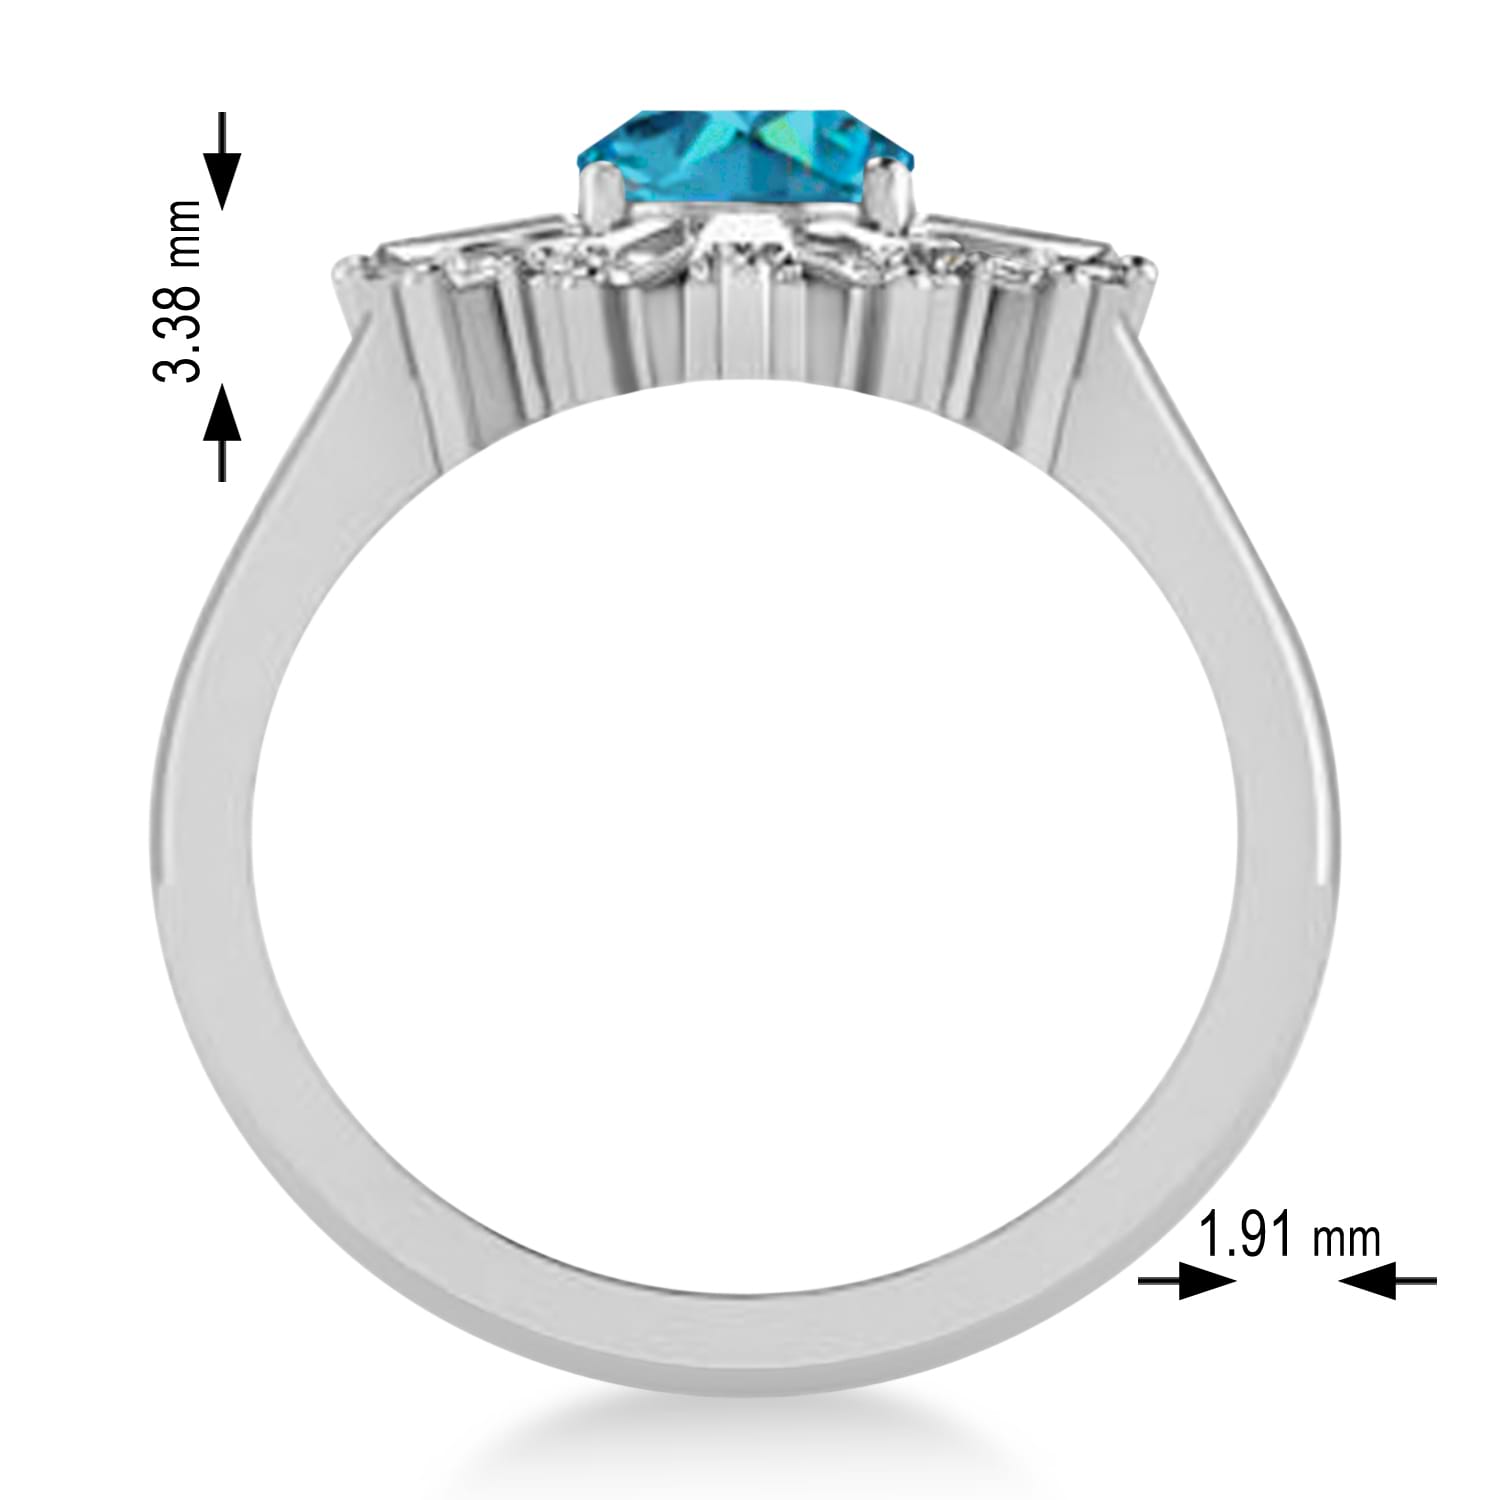 Blue Diamond Oval Cut Ballerina Engagement Ring 18k White Gold (2.51 ctw)